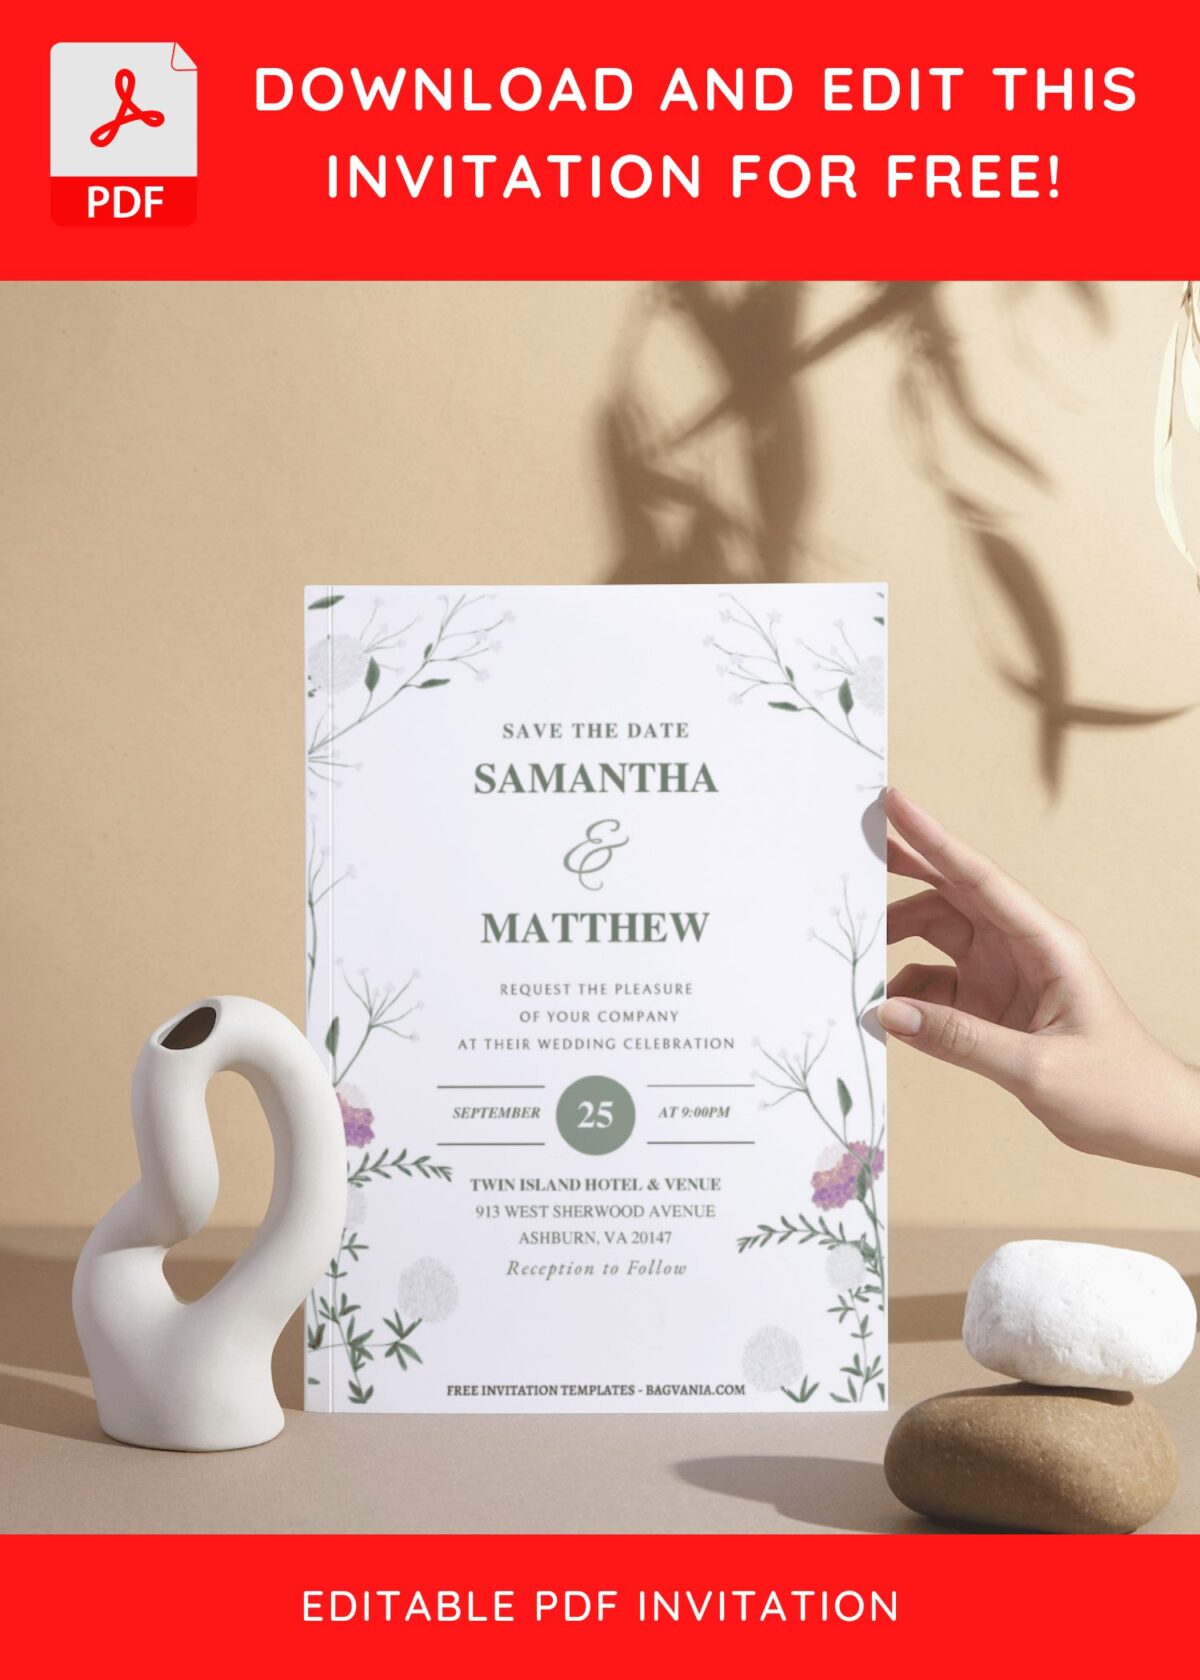 (Free Editable PDF) Romantic Floweret Wedding Invitation Templates I